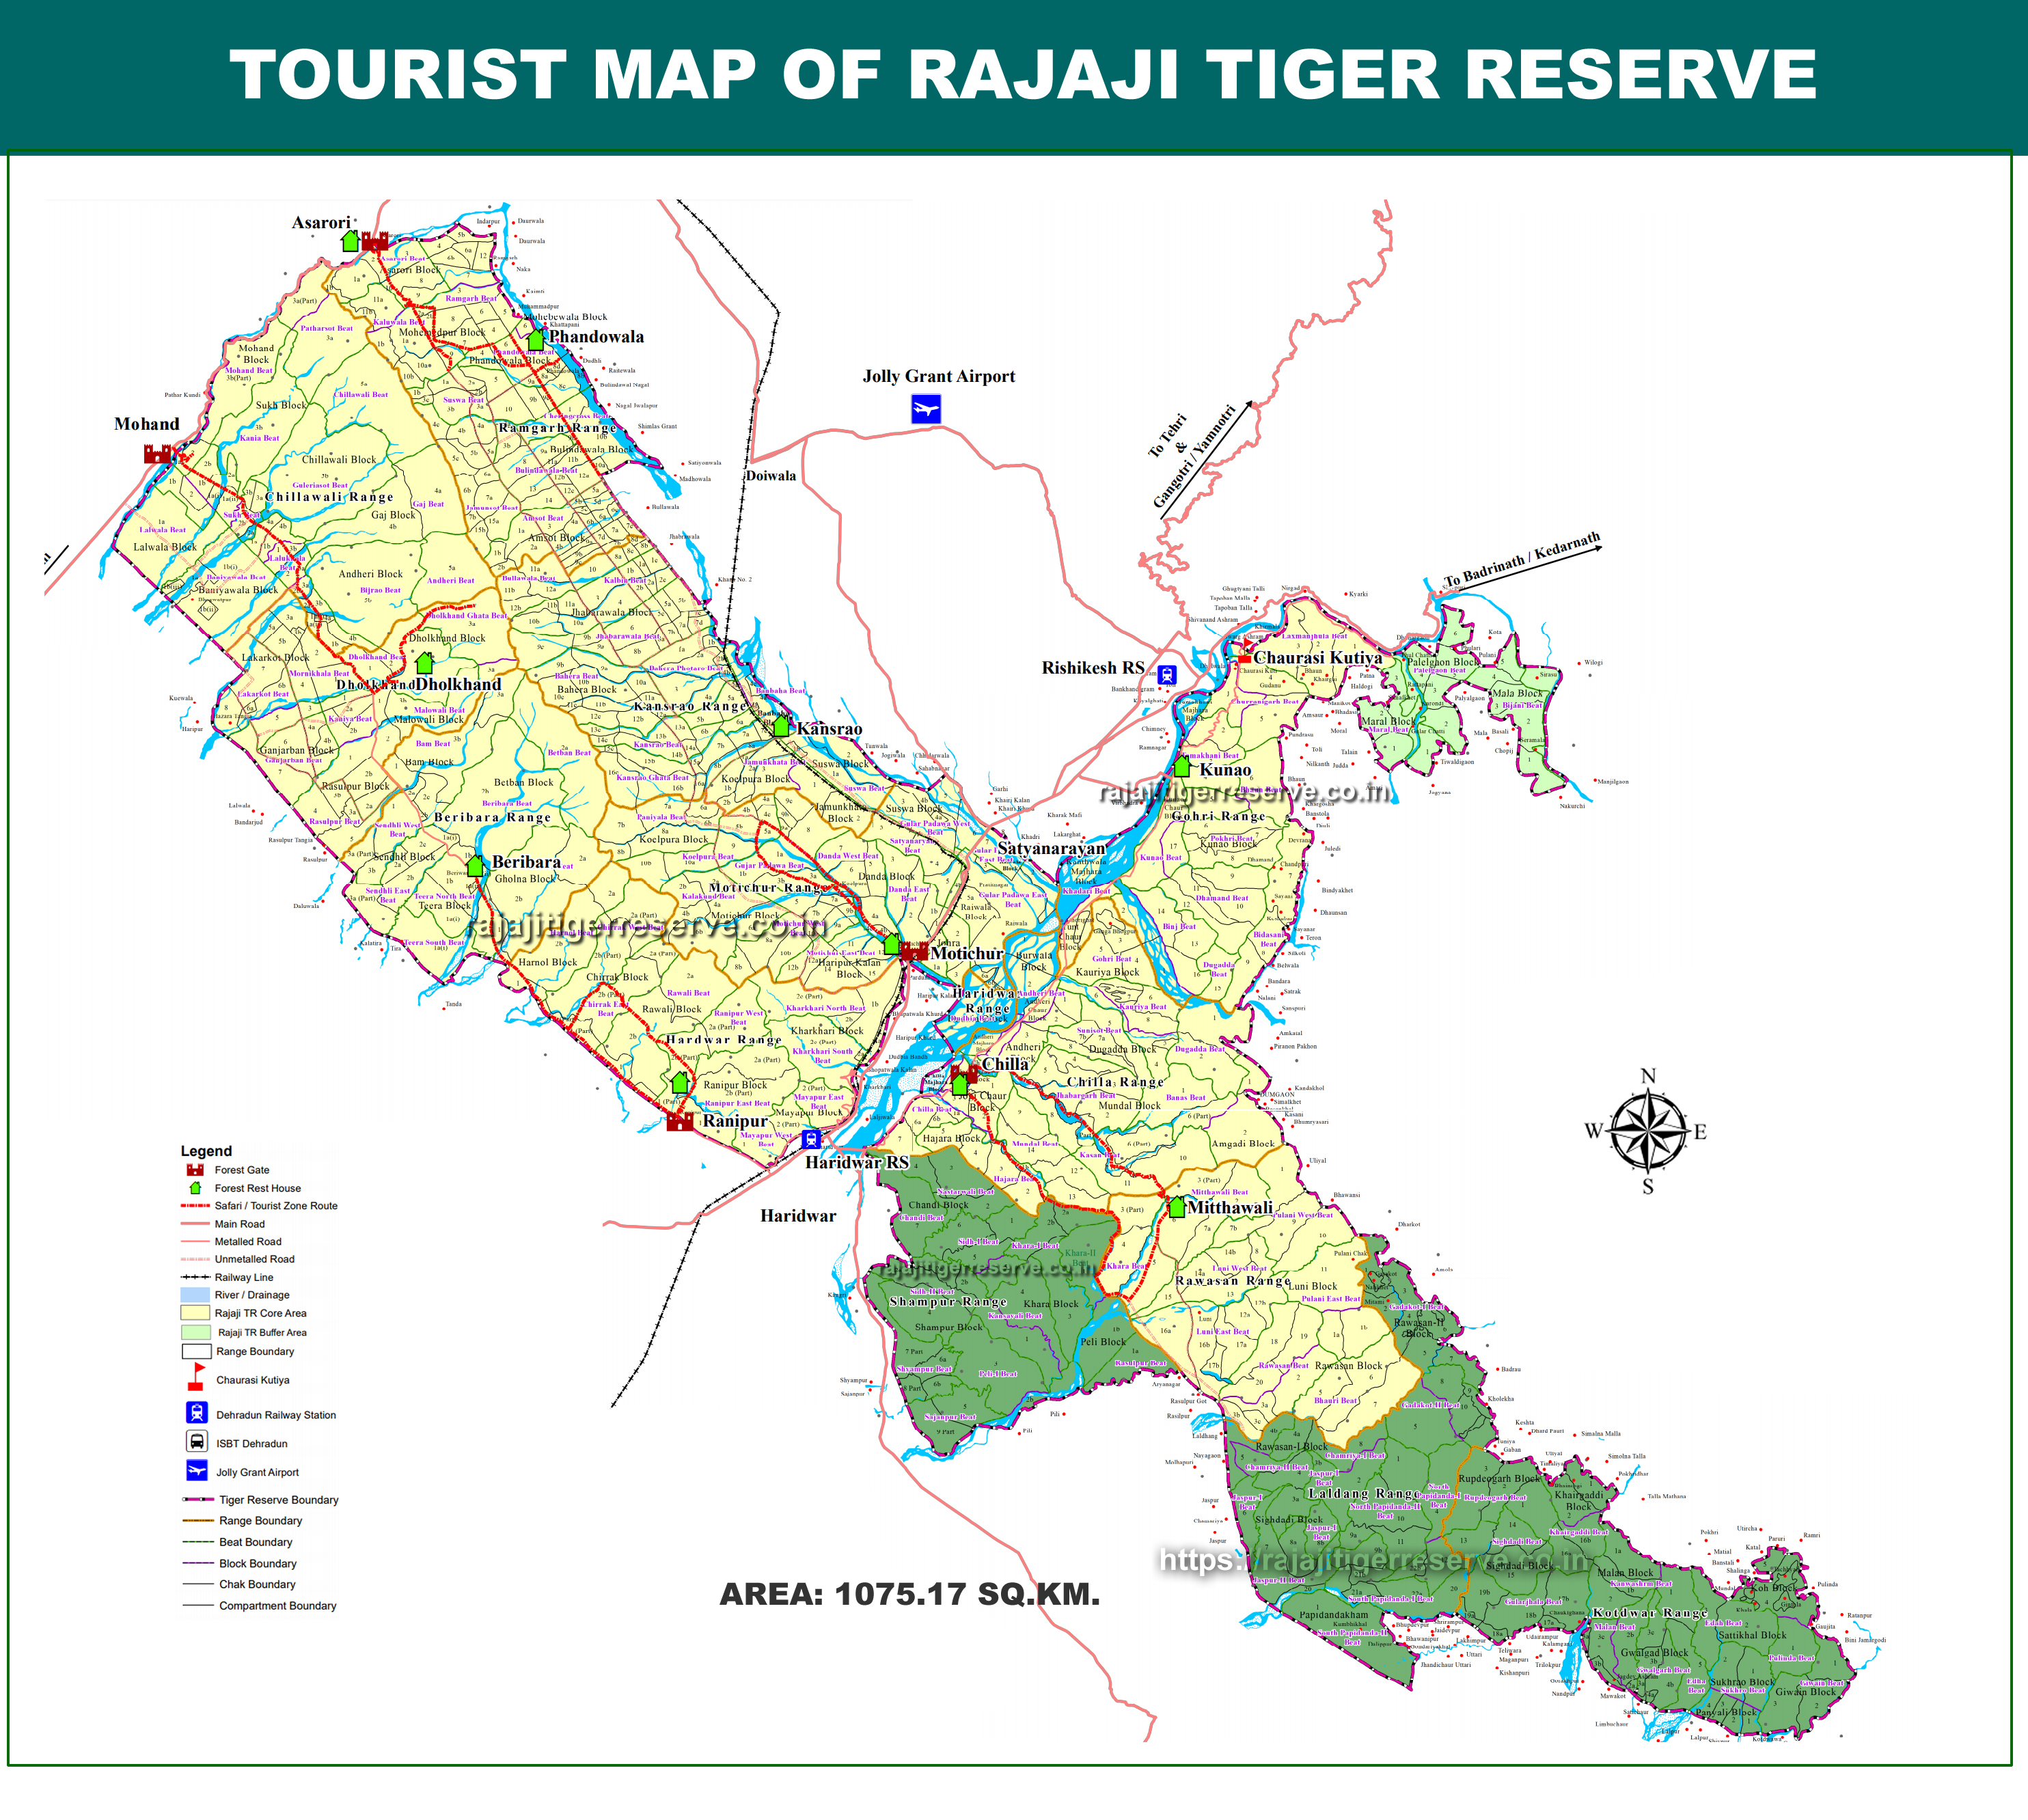 About Rajaji Tiger Reserve, Tiger Reserve in India